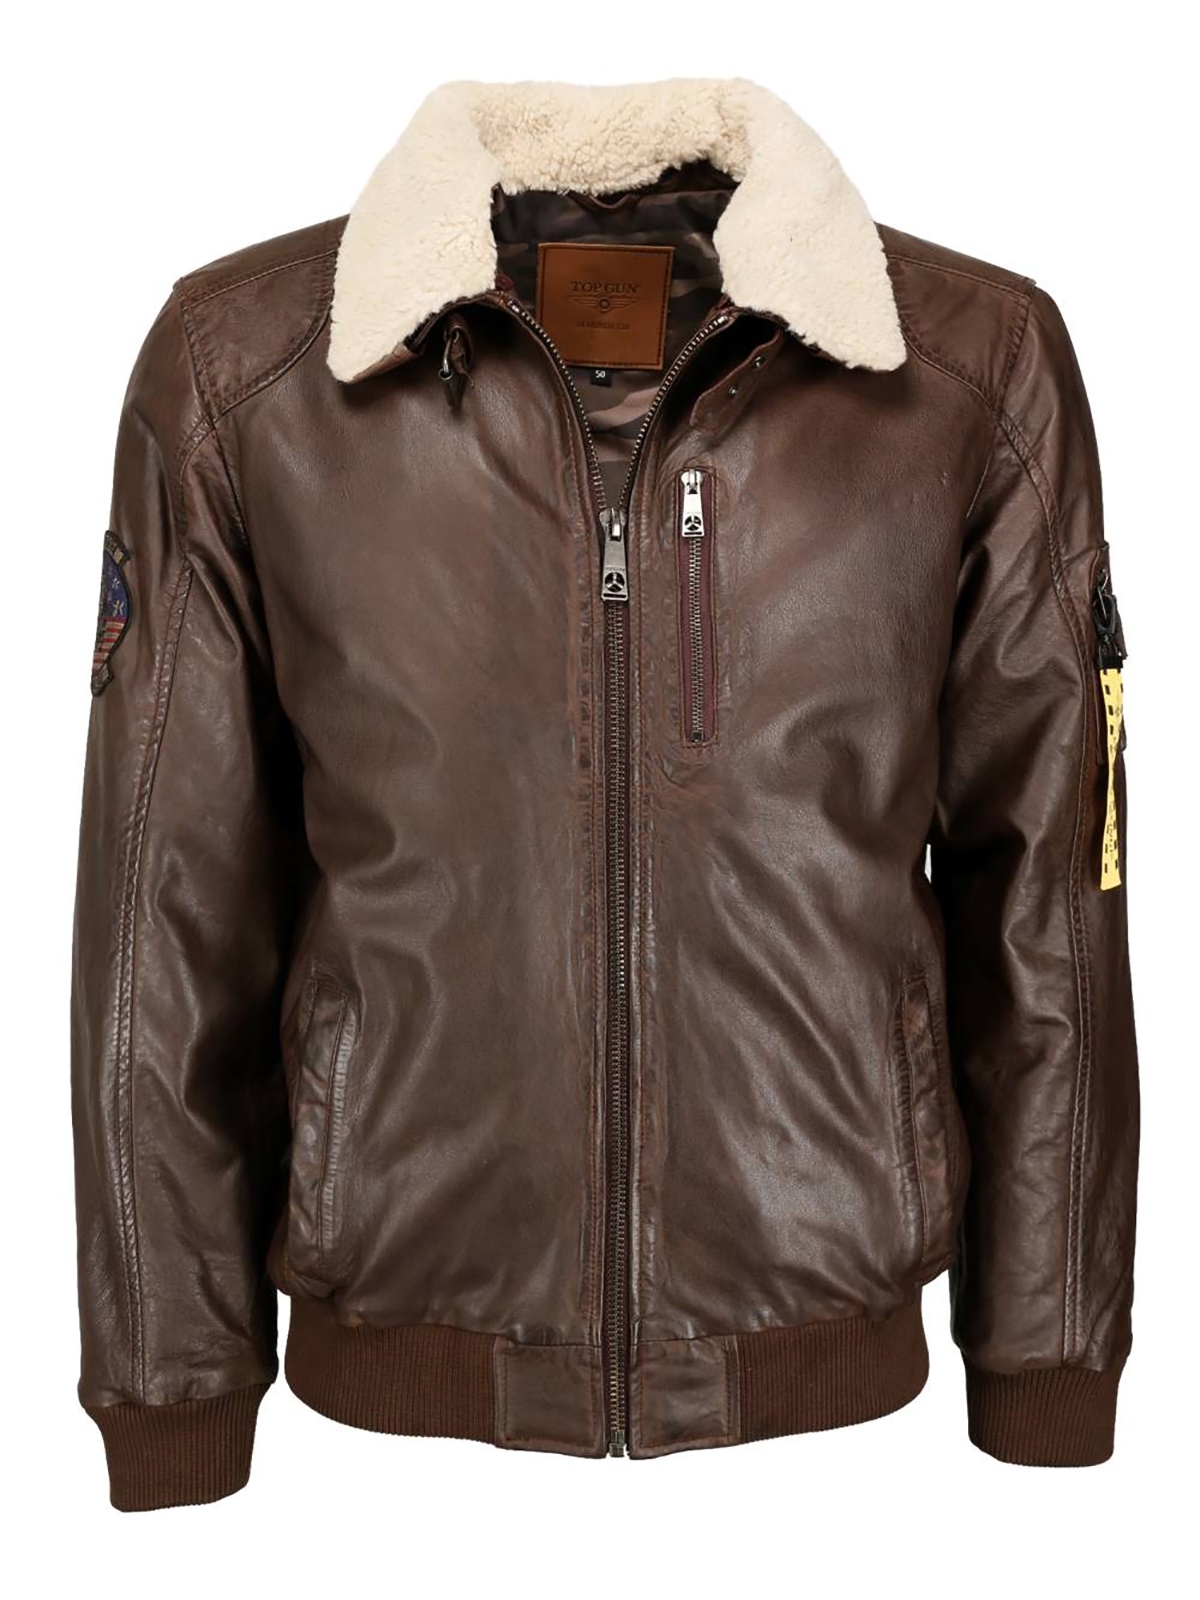 TOP GUN Rafel - Leather Bomber Jacket, brown, size 52 (XL)